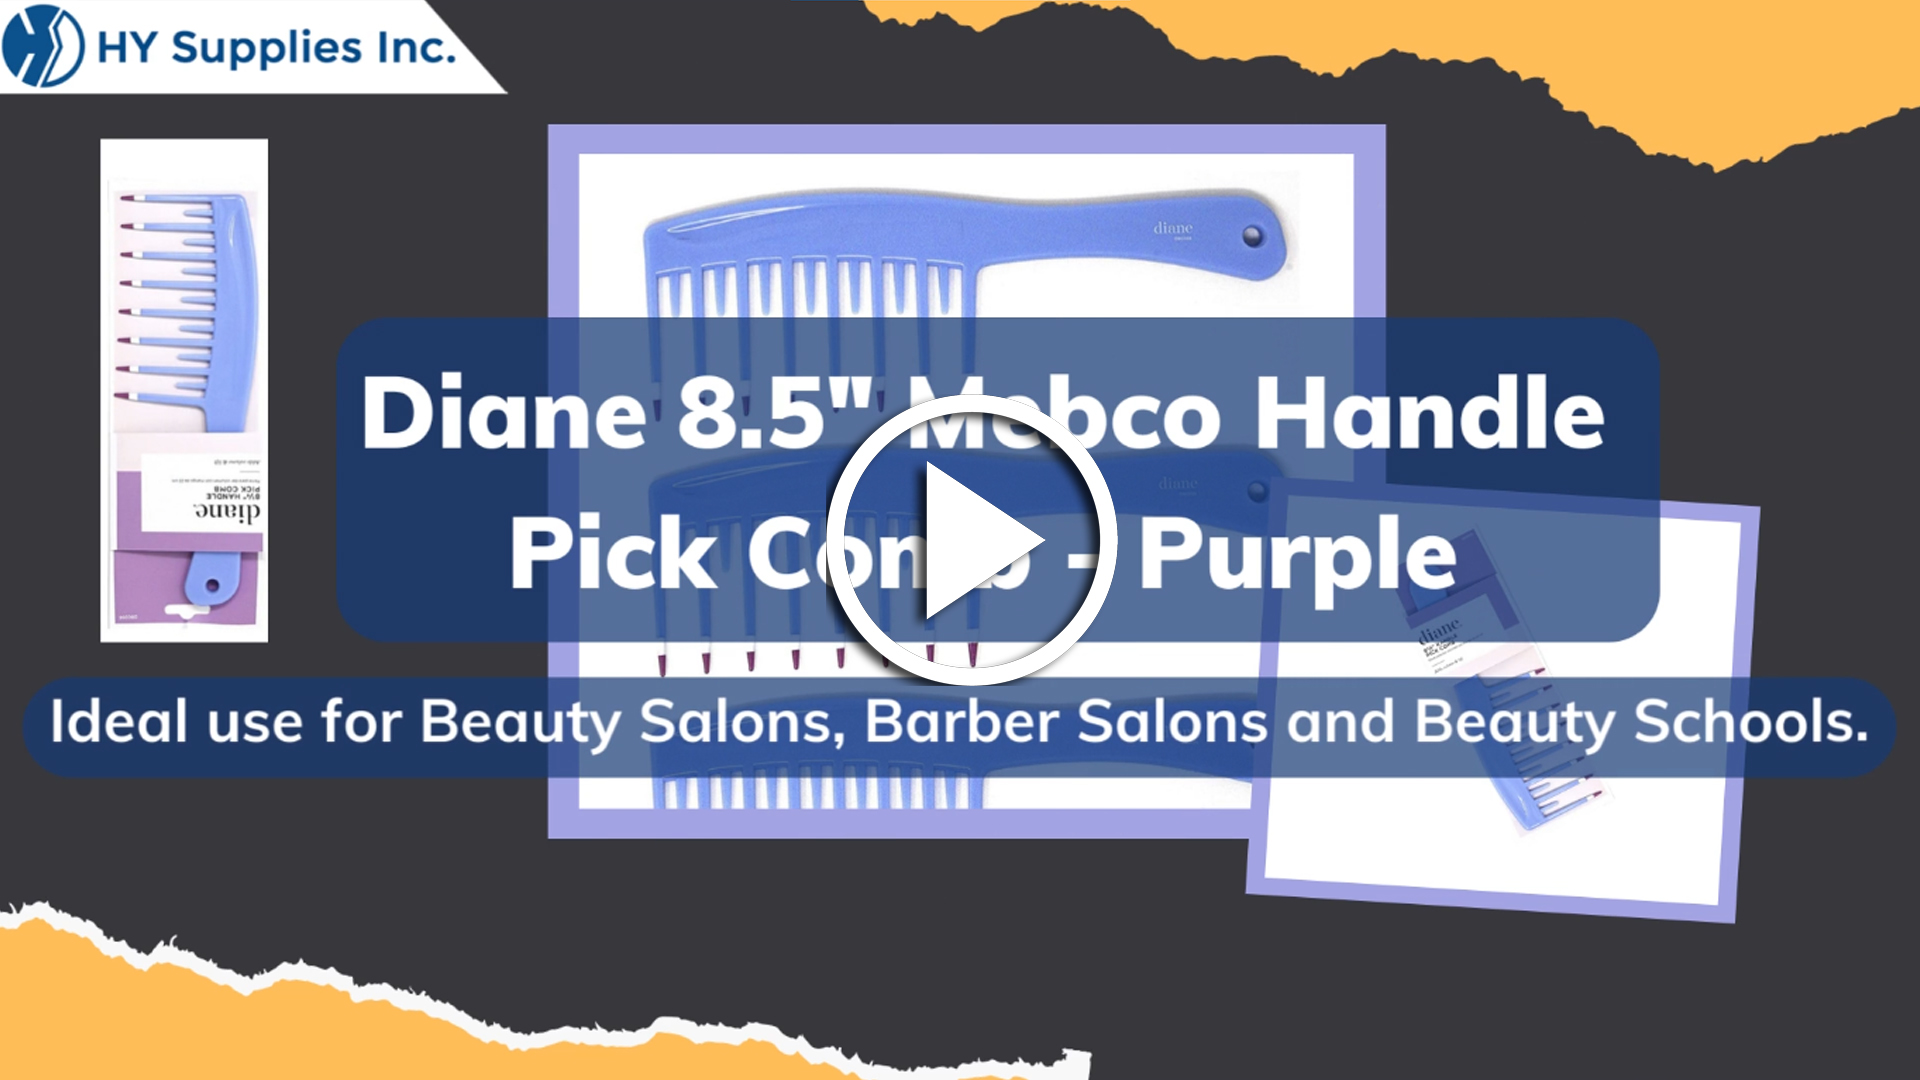 Diane 8.5" Mebco Handle Pick Comb - Purple